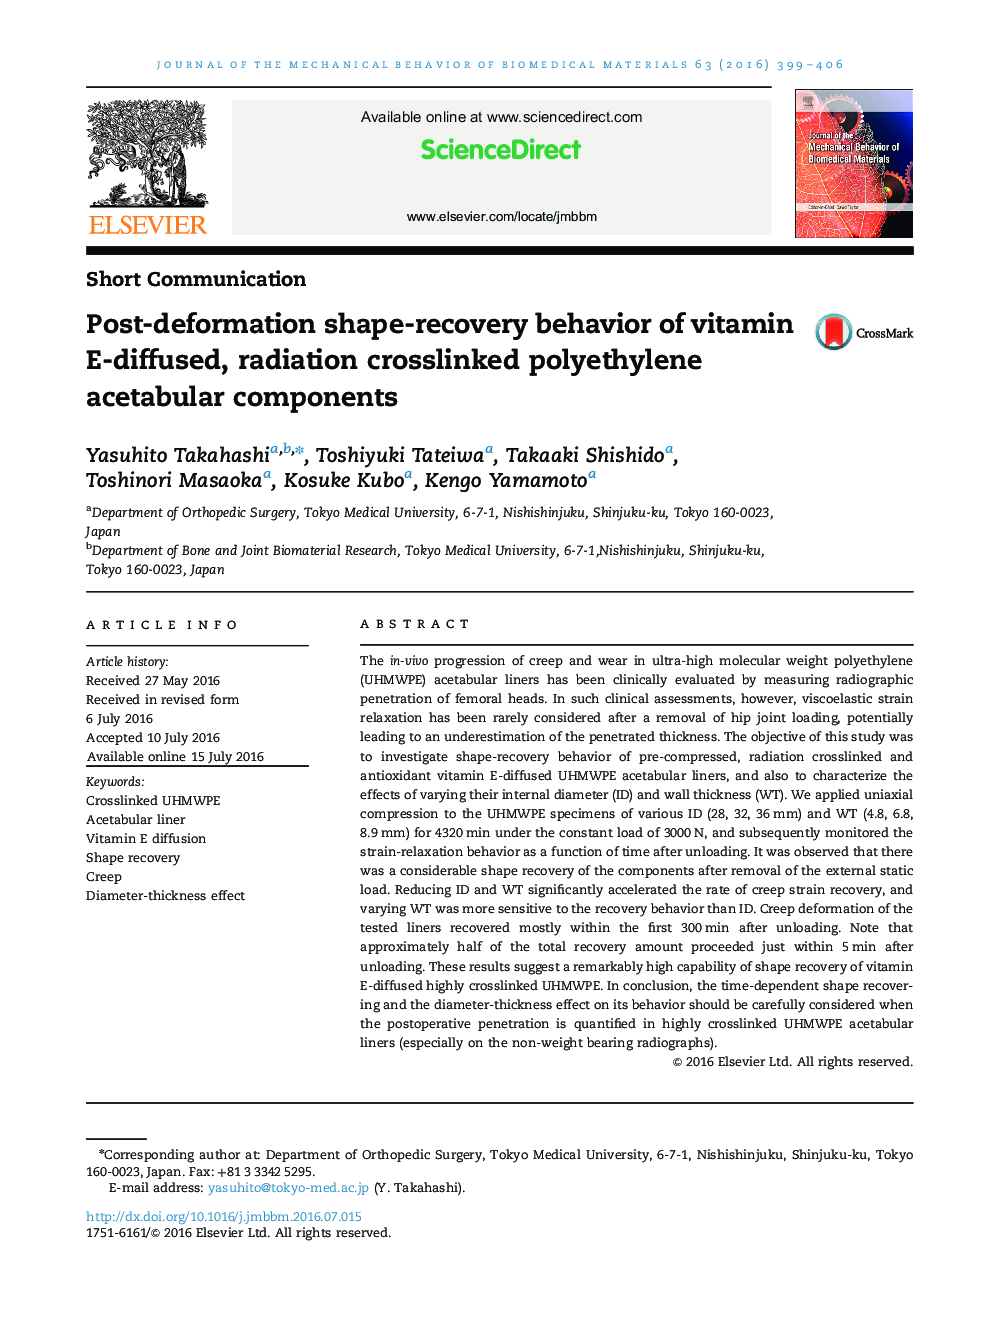 Post-deformation shape-recovery behavior of vitamin E-diffused, radiation crosslinked polyethylene acetabular components